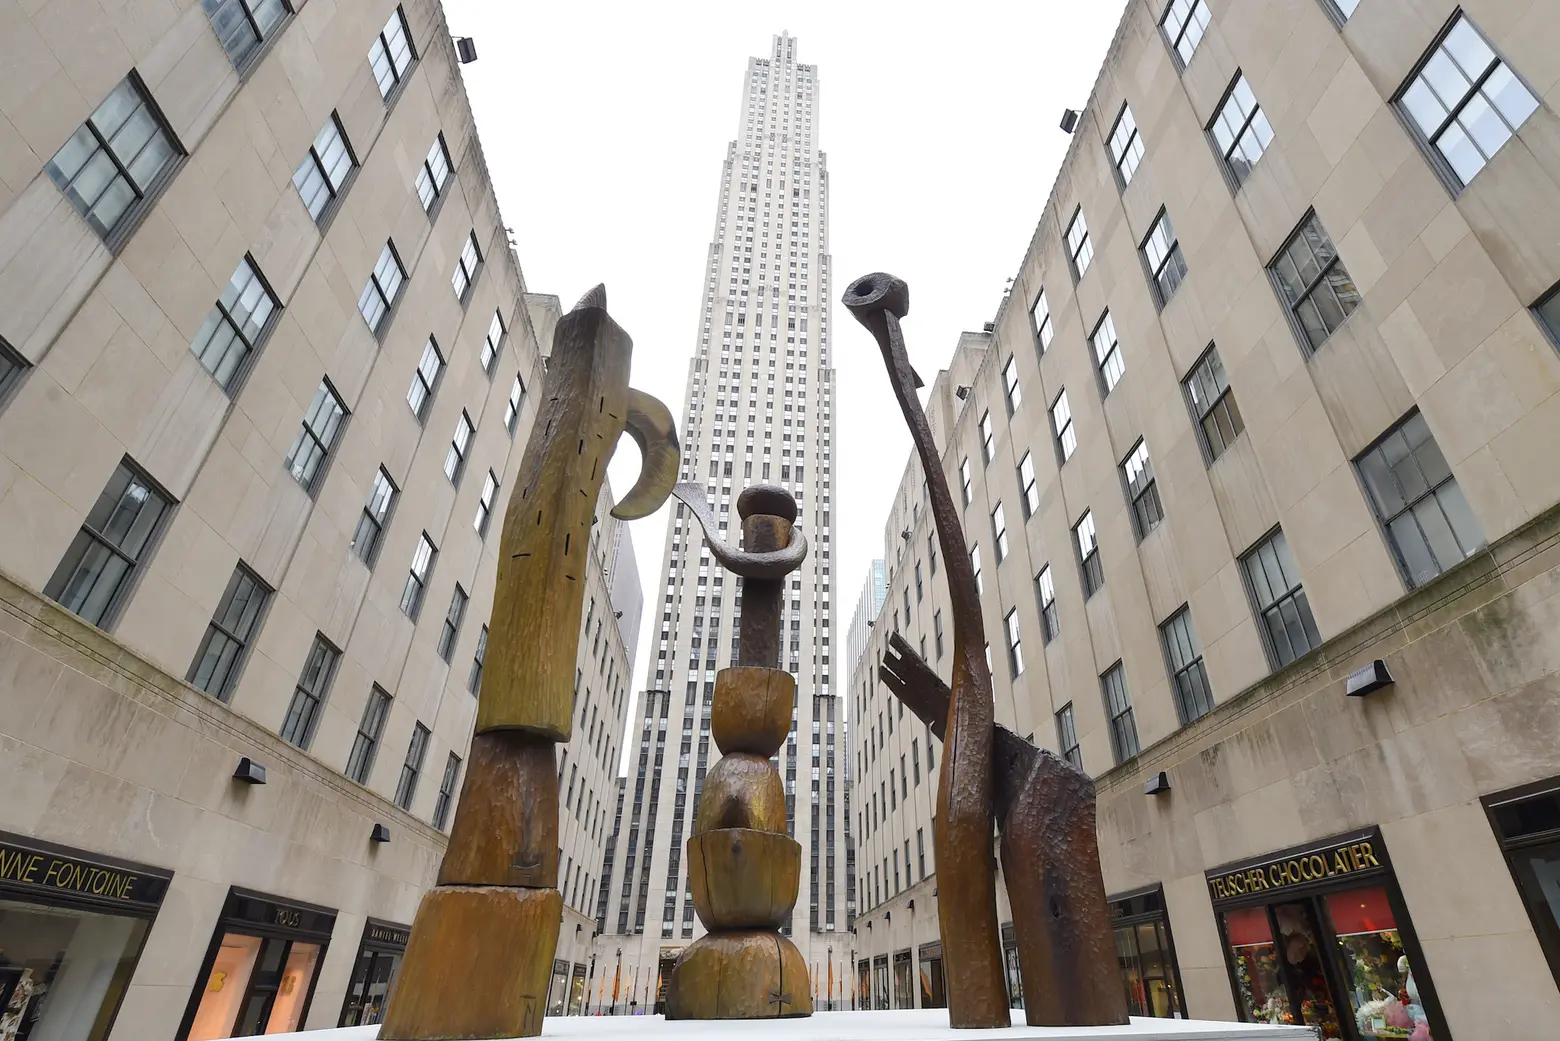 Free outdoor sculpture garden opens at Rockefeller Center